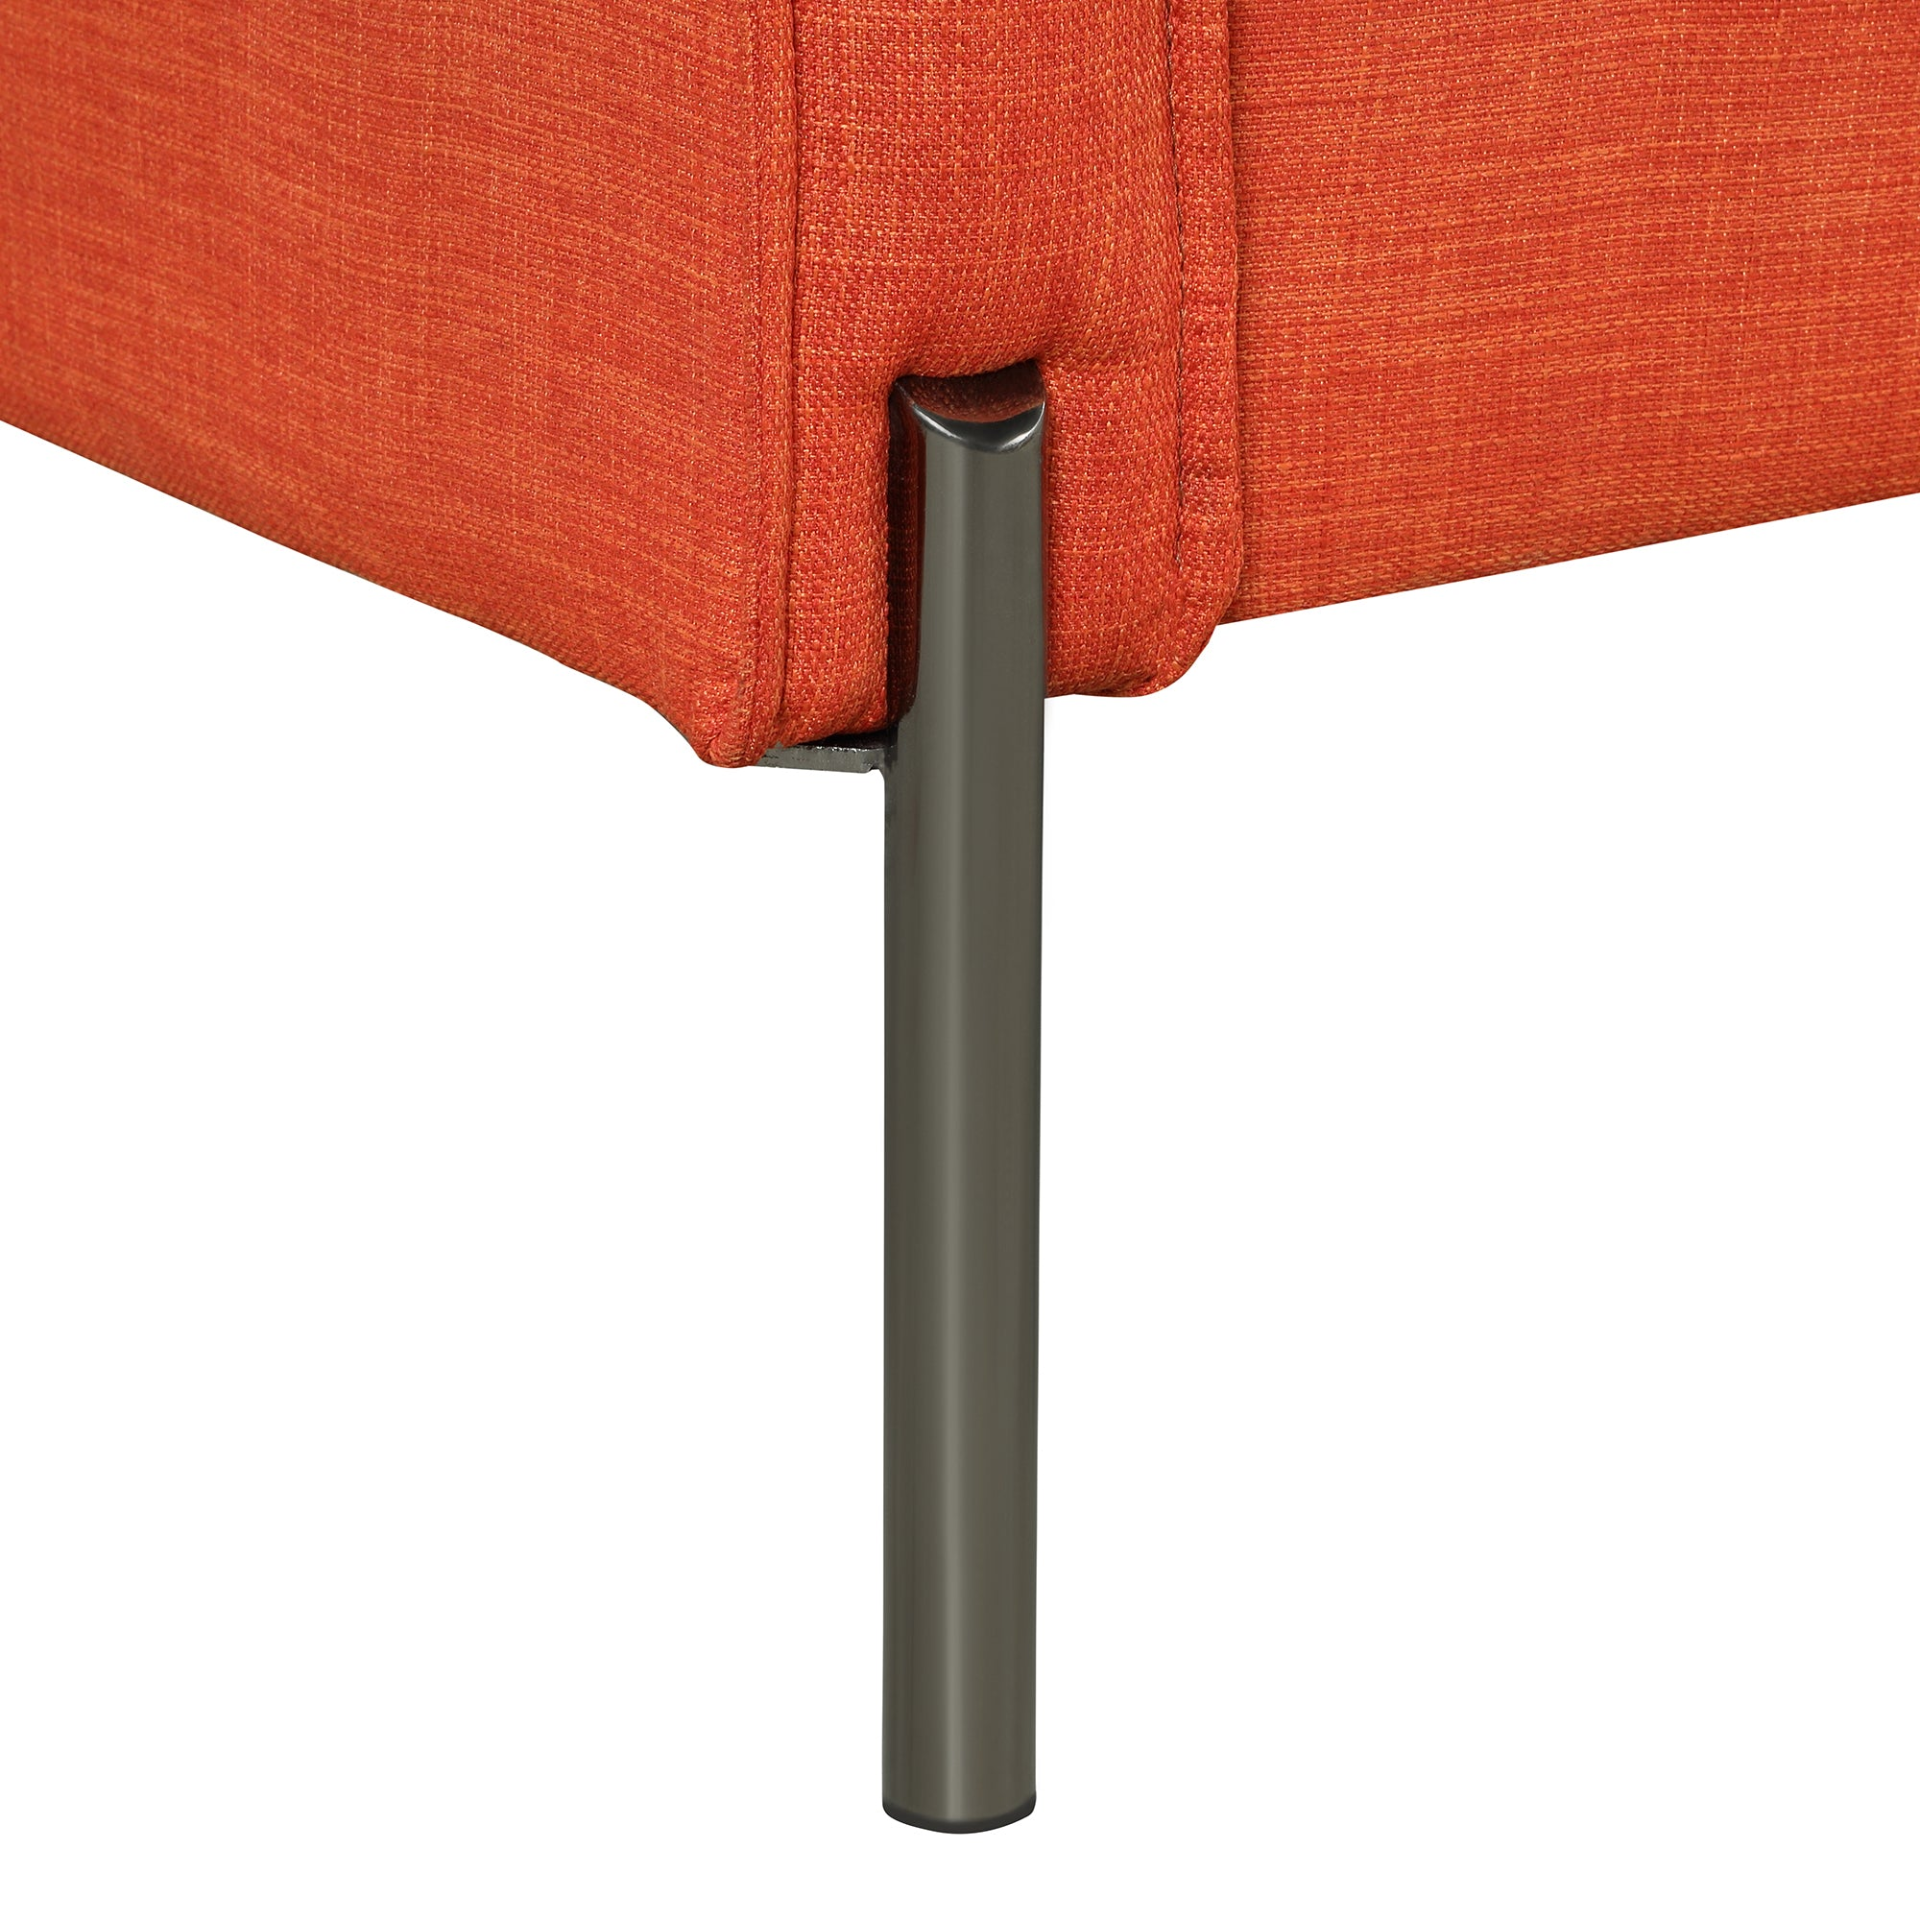 Orange - Classic Modern Style Loveseat Sofa (56")